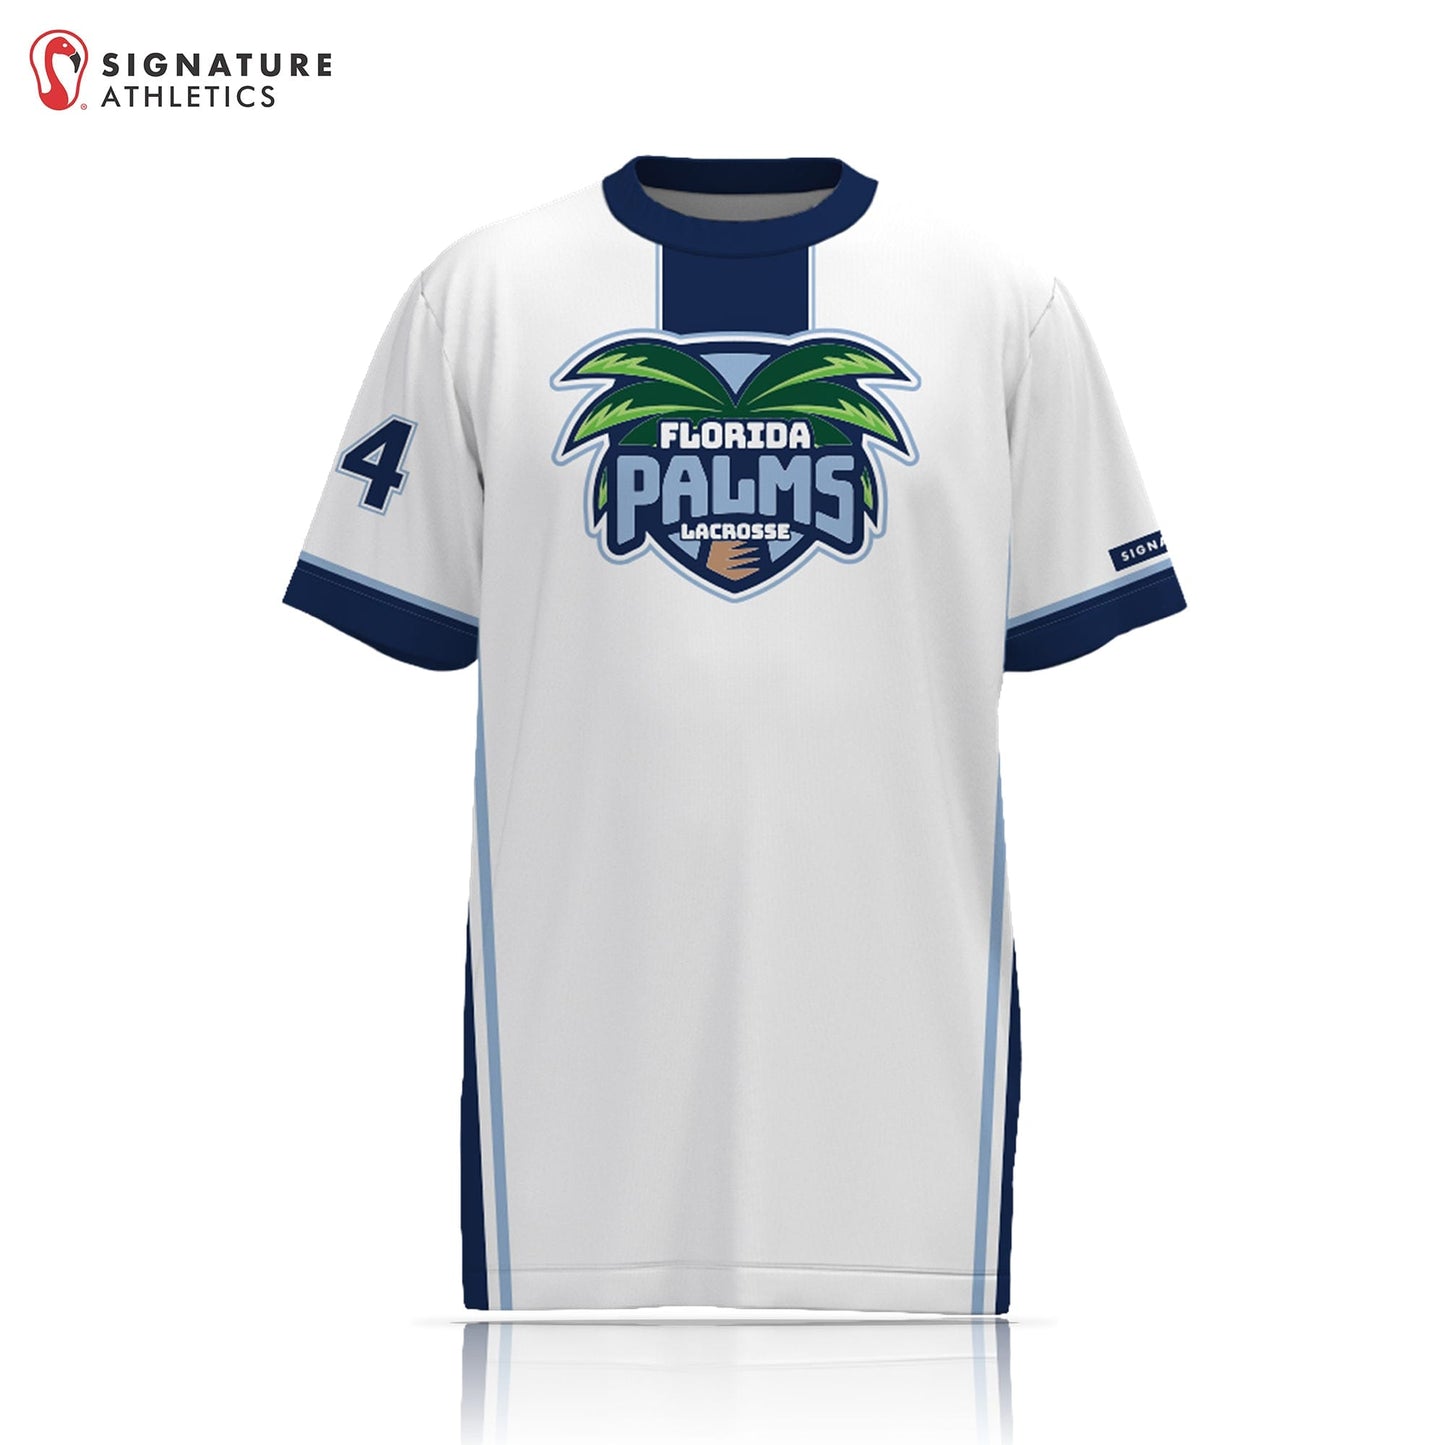 Florida Palms Lacrosse Women's Player Short Sleeve Shooting Shirt Signature Lacrosse